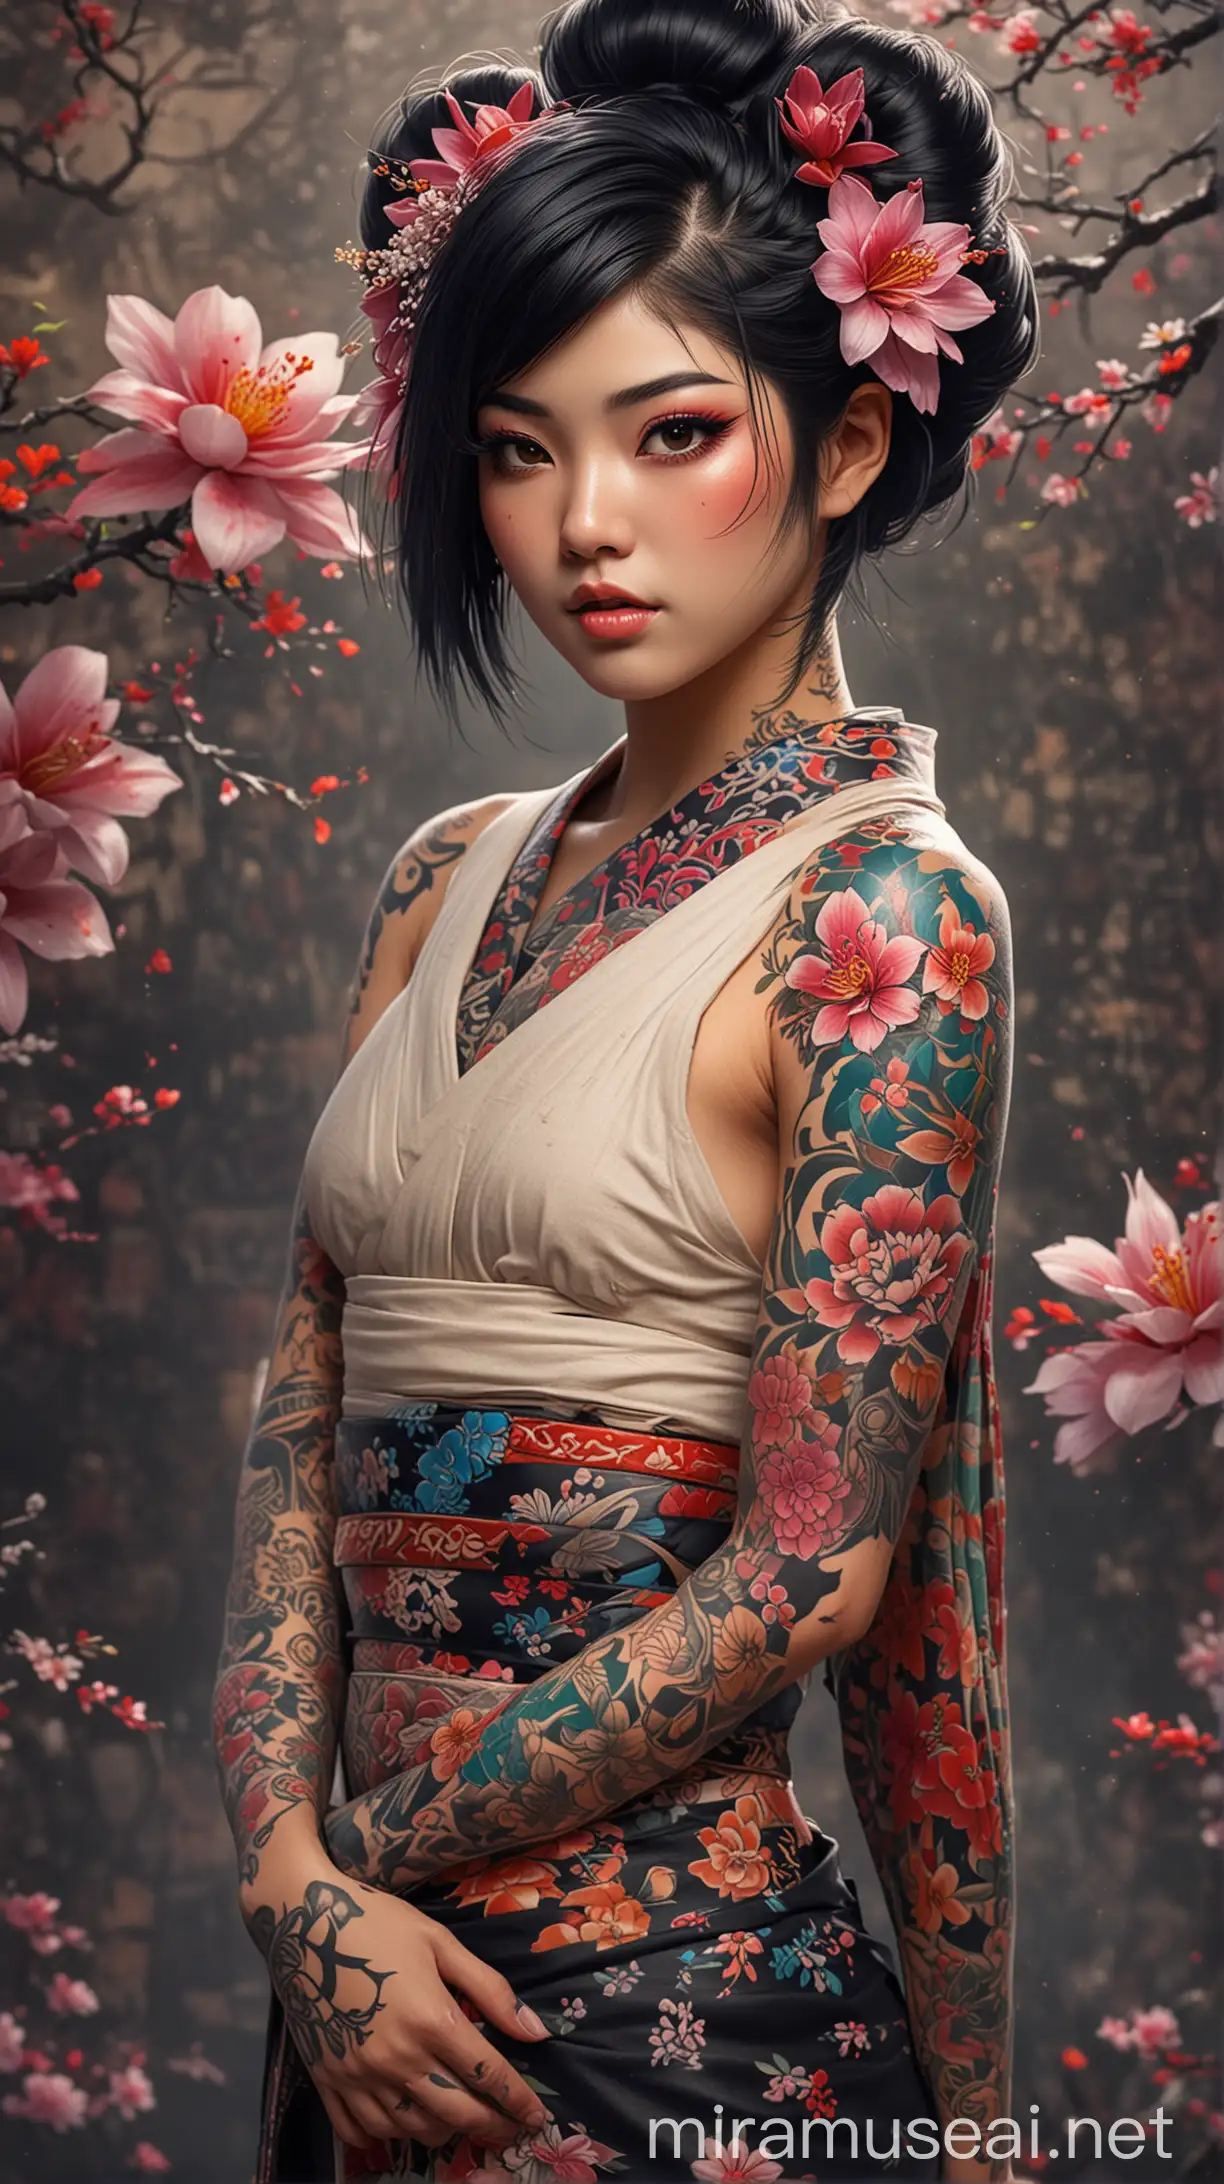 Colorful Tattooed Geisha in Fantasy Anime Illustration Style